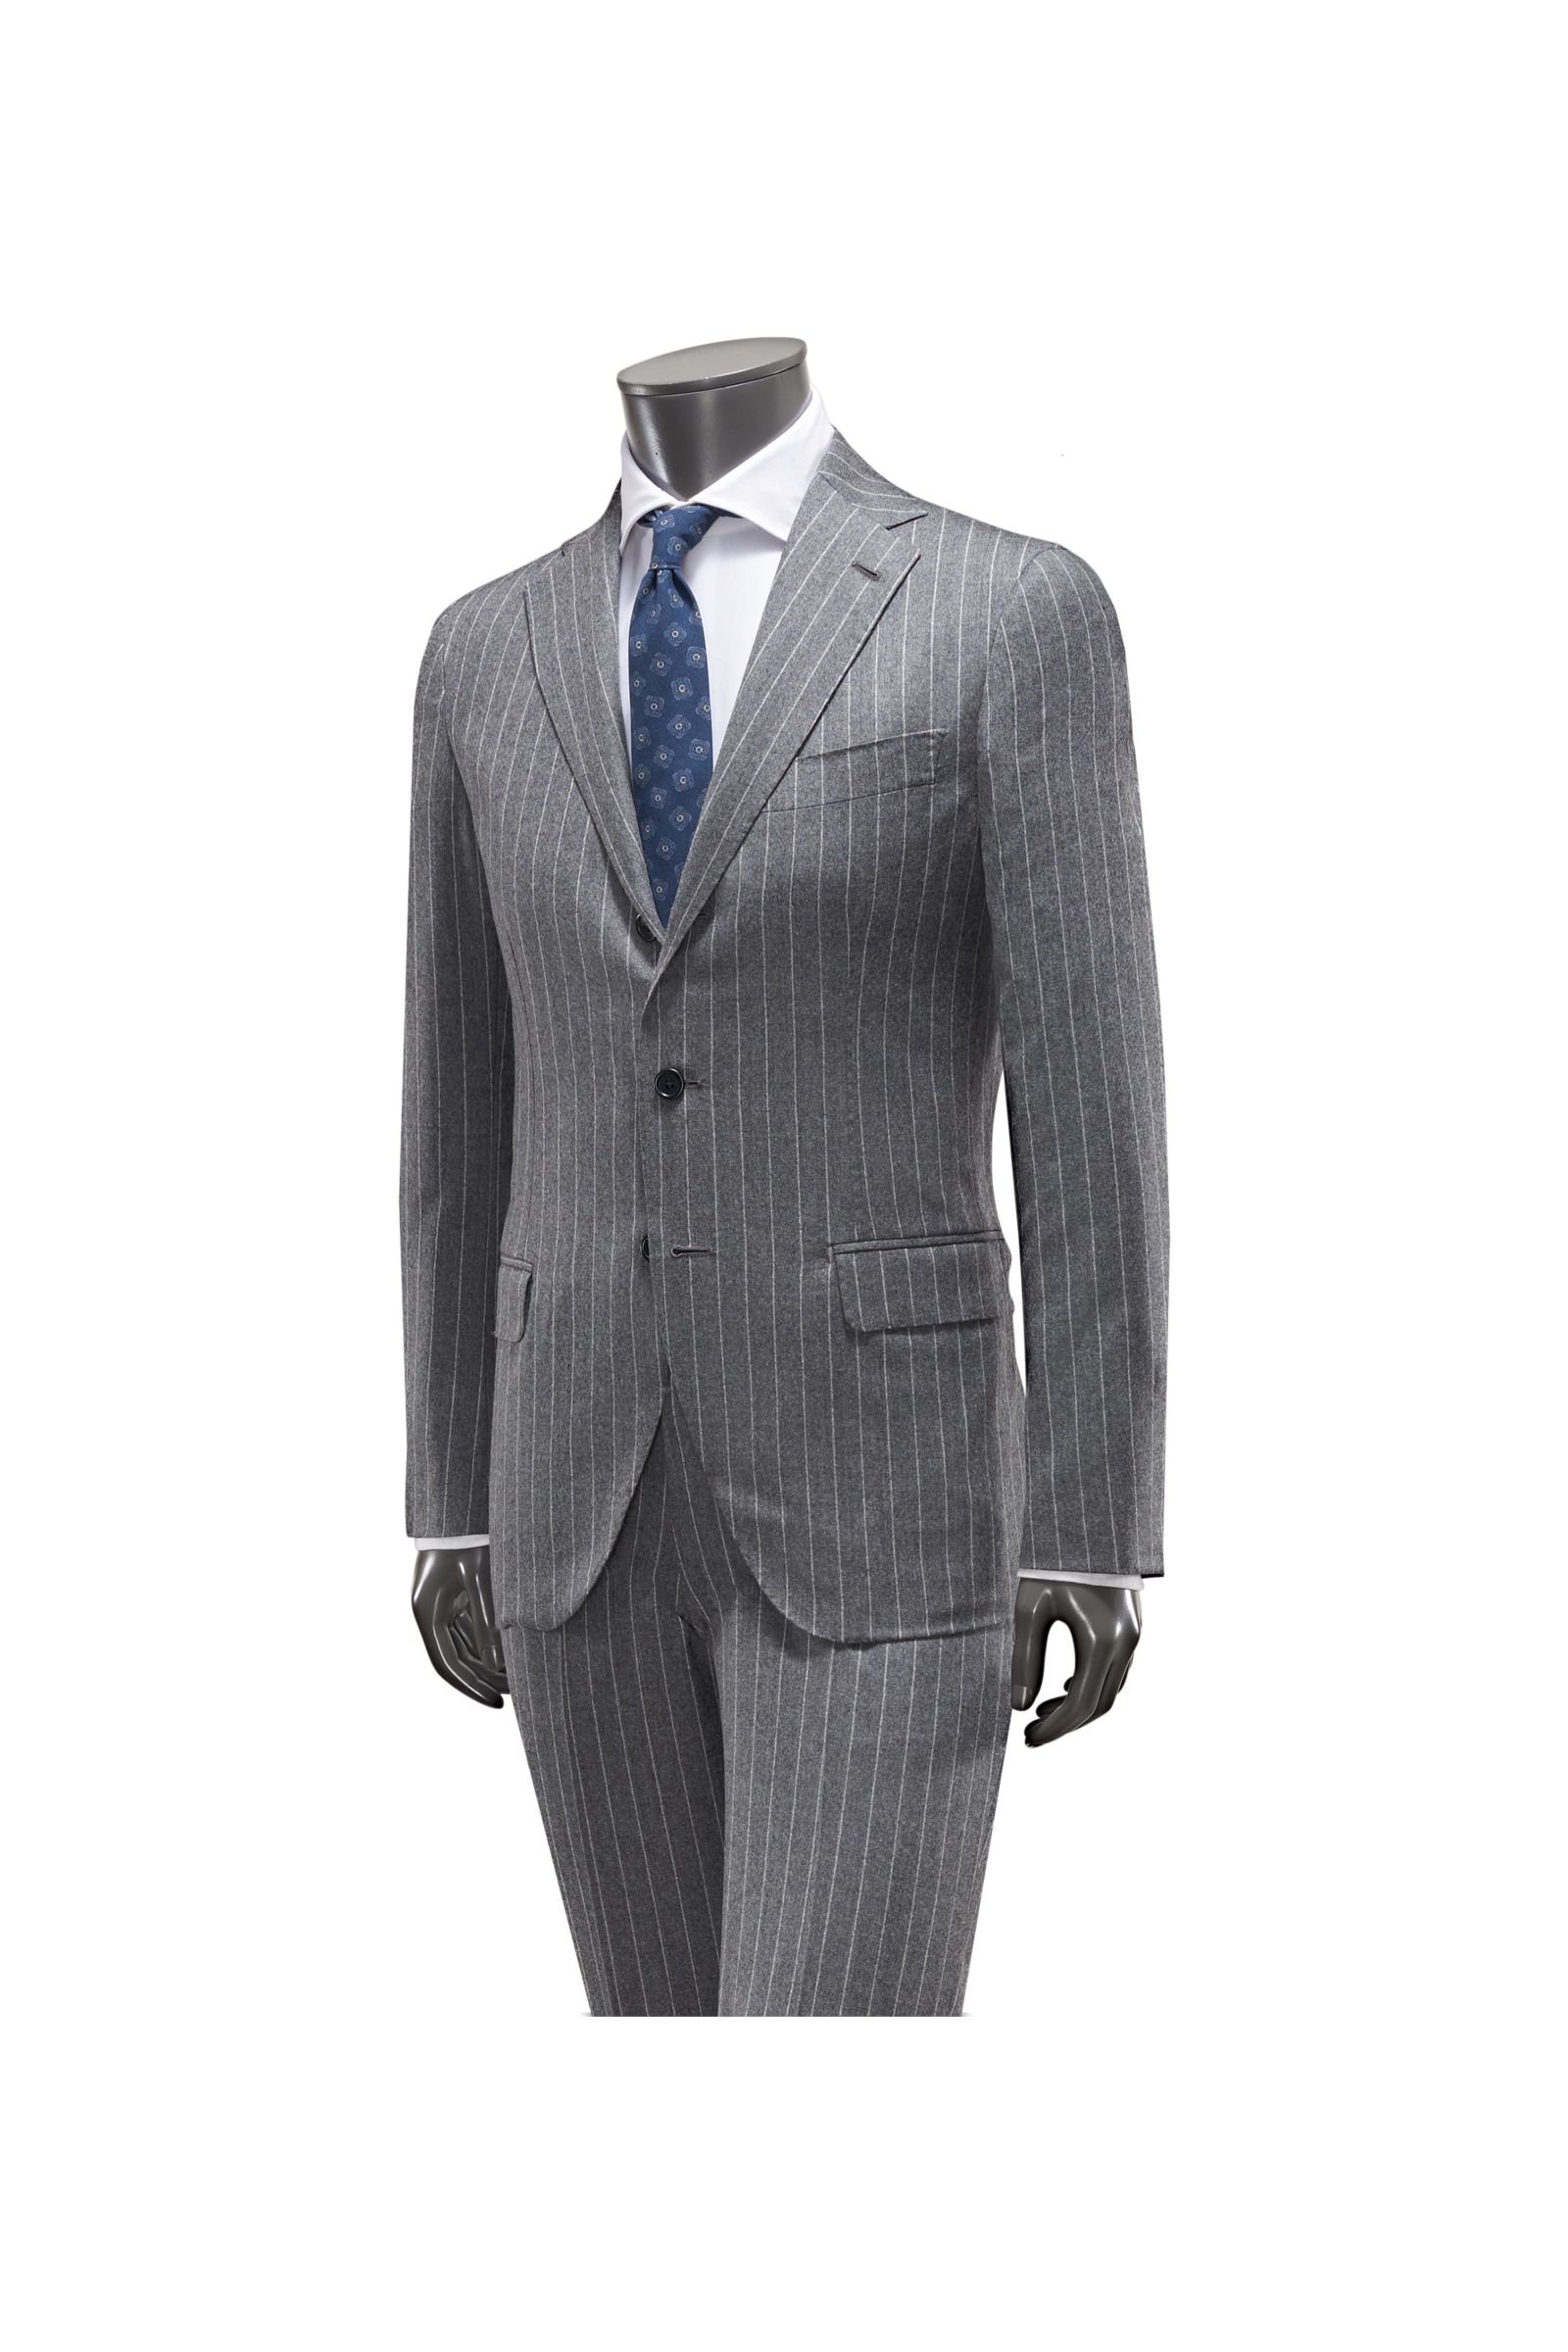 Suit 'Salina' grey striped